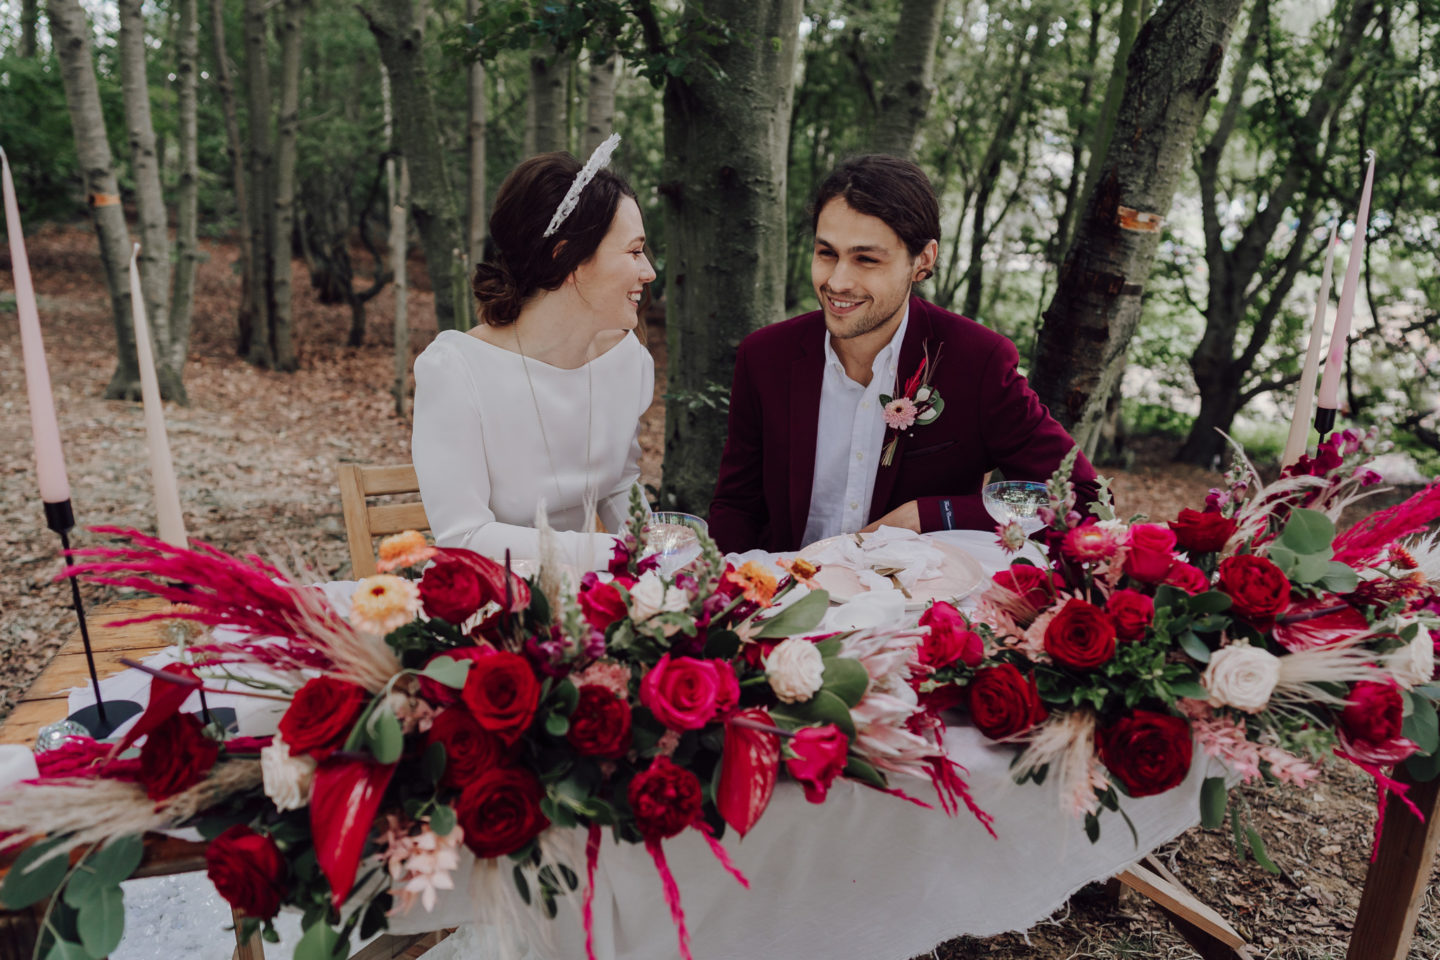 Disco Woodland Wedding With Glitter Balls and Ethical British Bridalwear